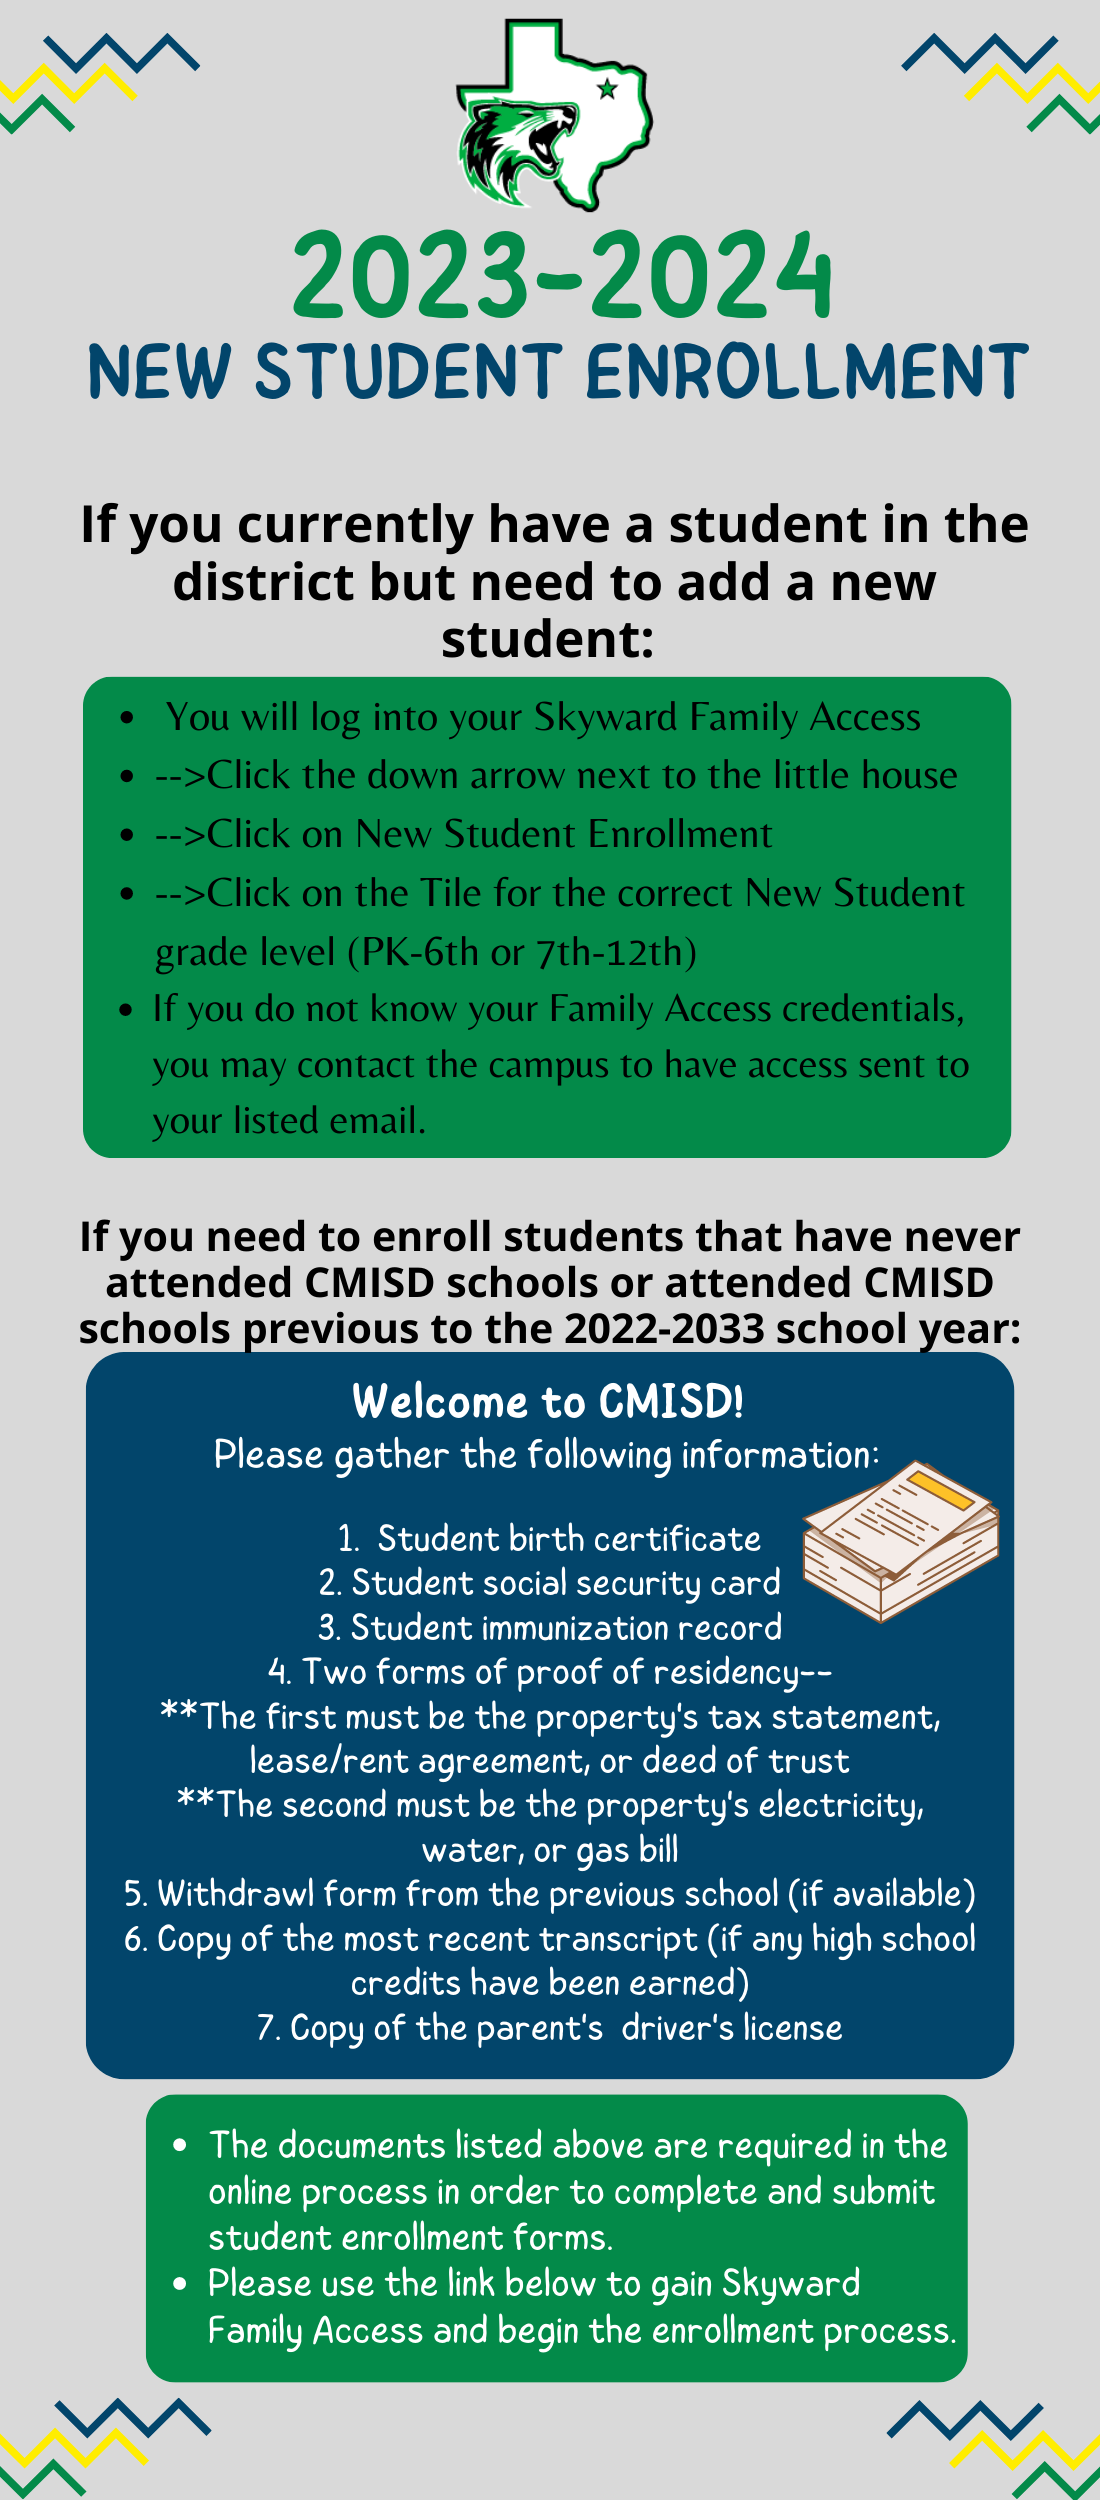 New Student Enrollment Information